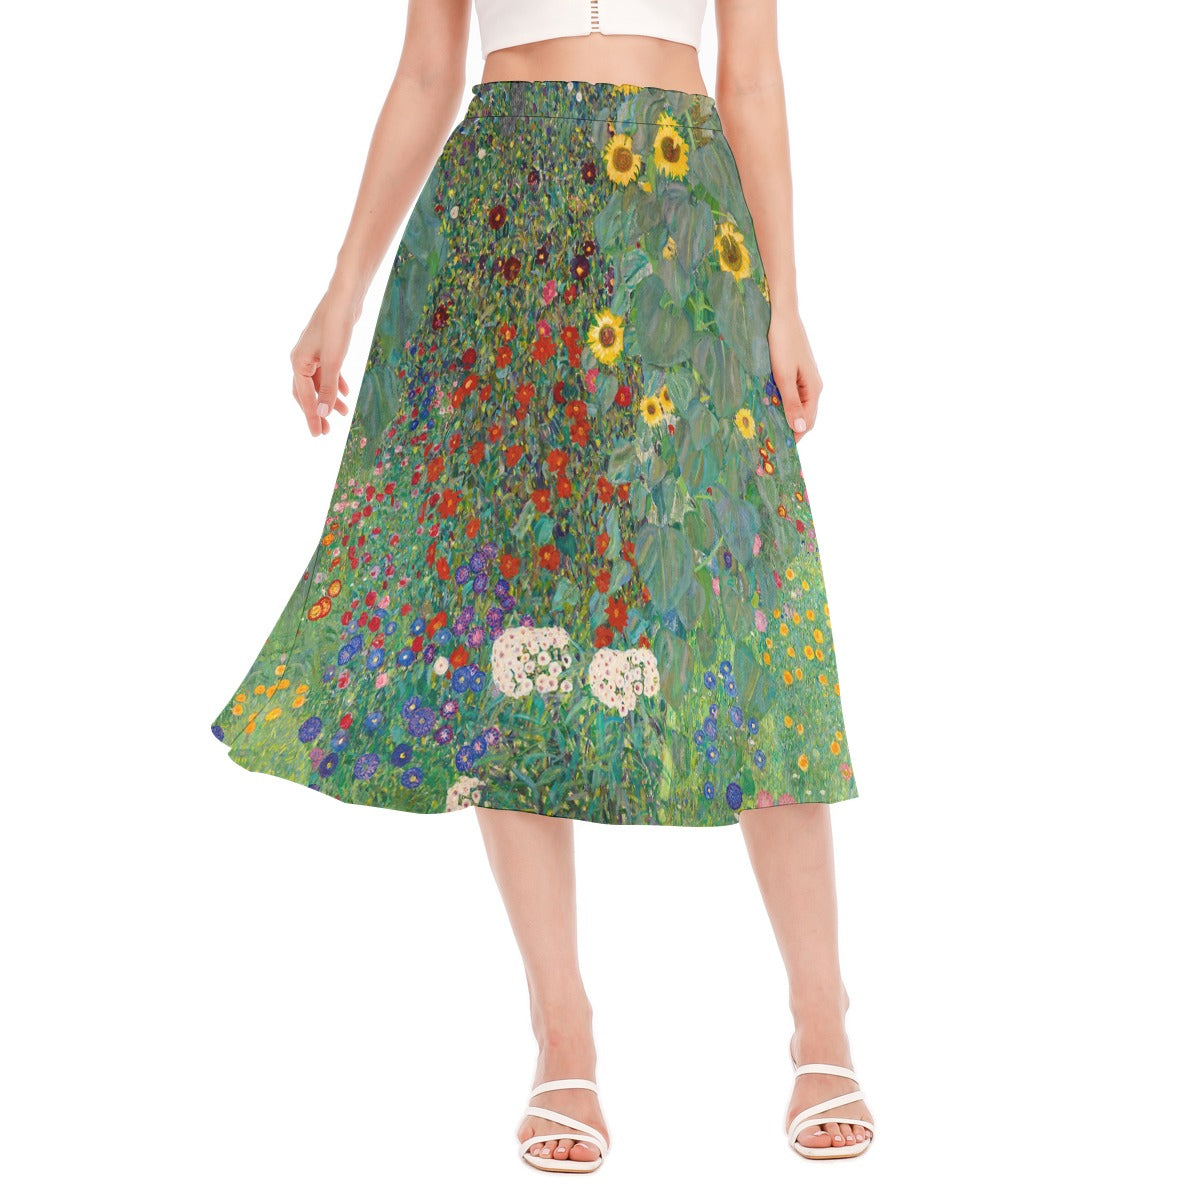 Whimsical sunflower chiffon skirt